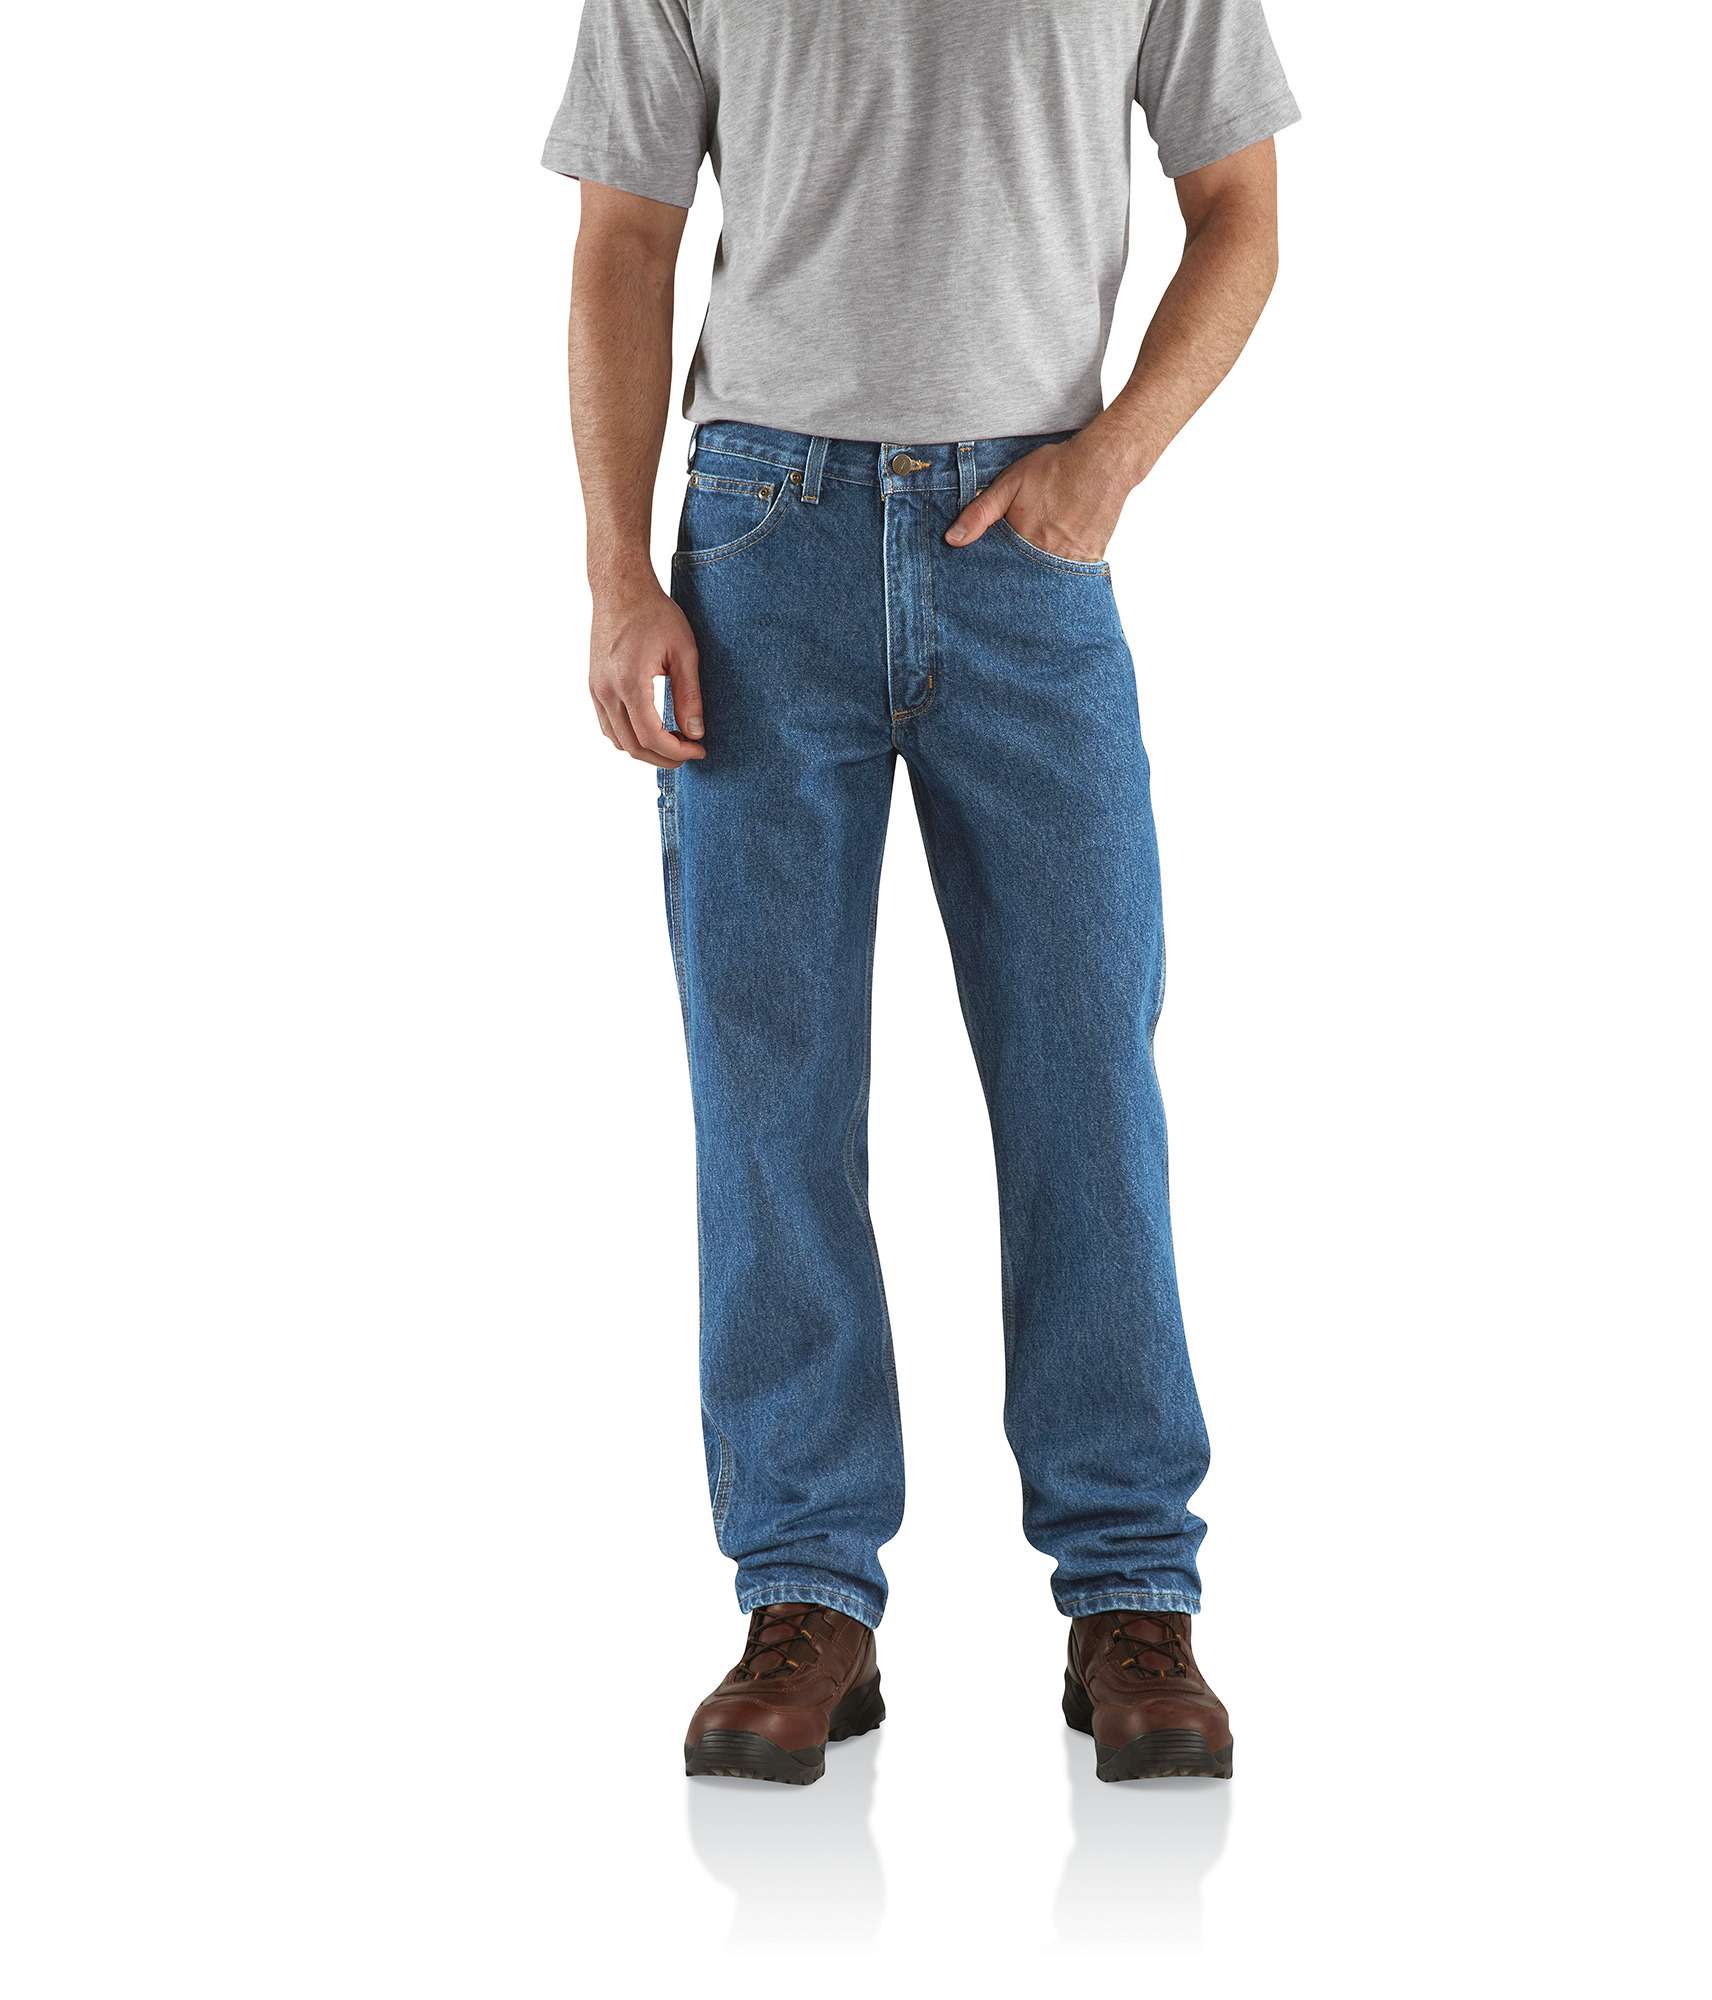 Duck Jeans, Relaxed Men's Carpenter Jean